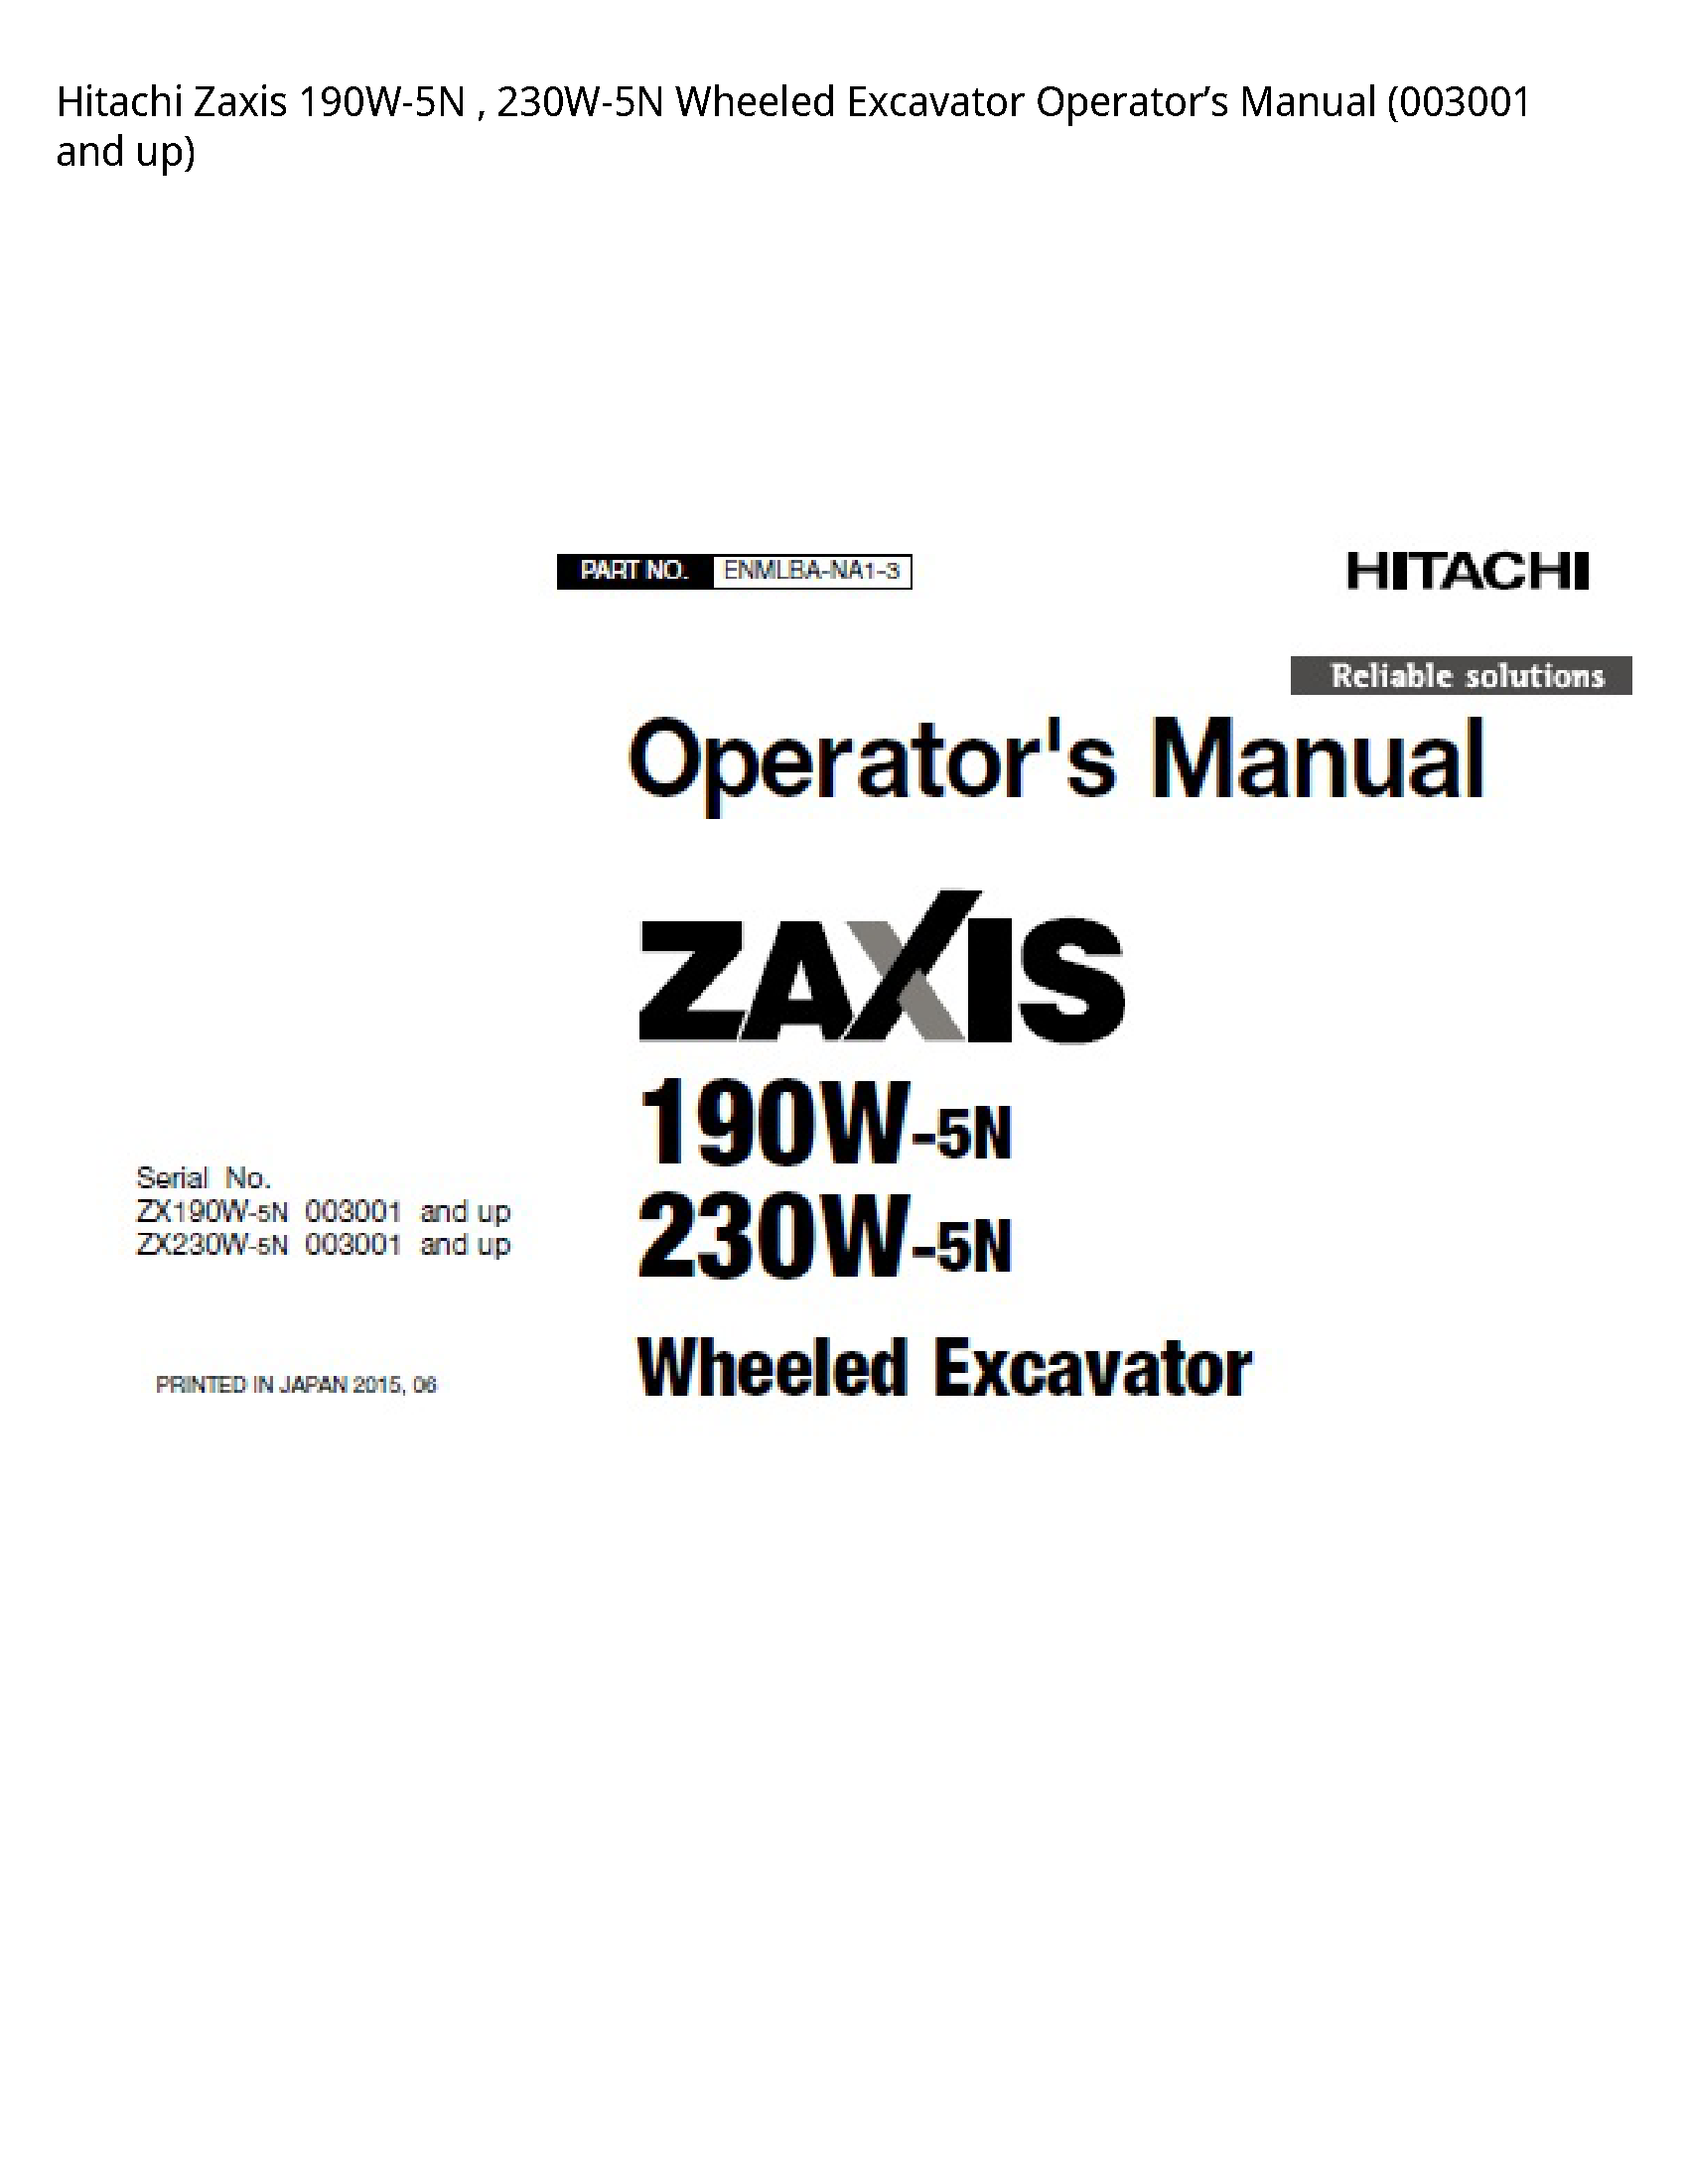 Hitachi 190W-5N Zaxis Wheeled Excavator Operator’s manual